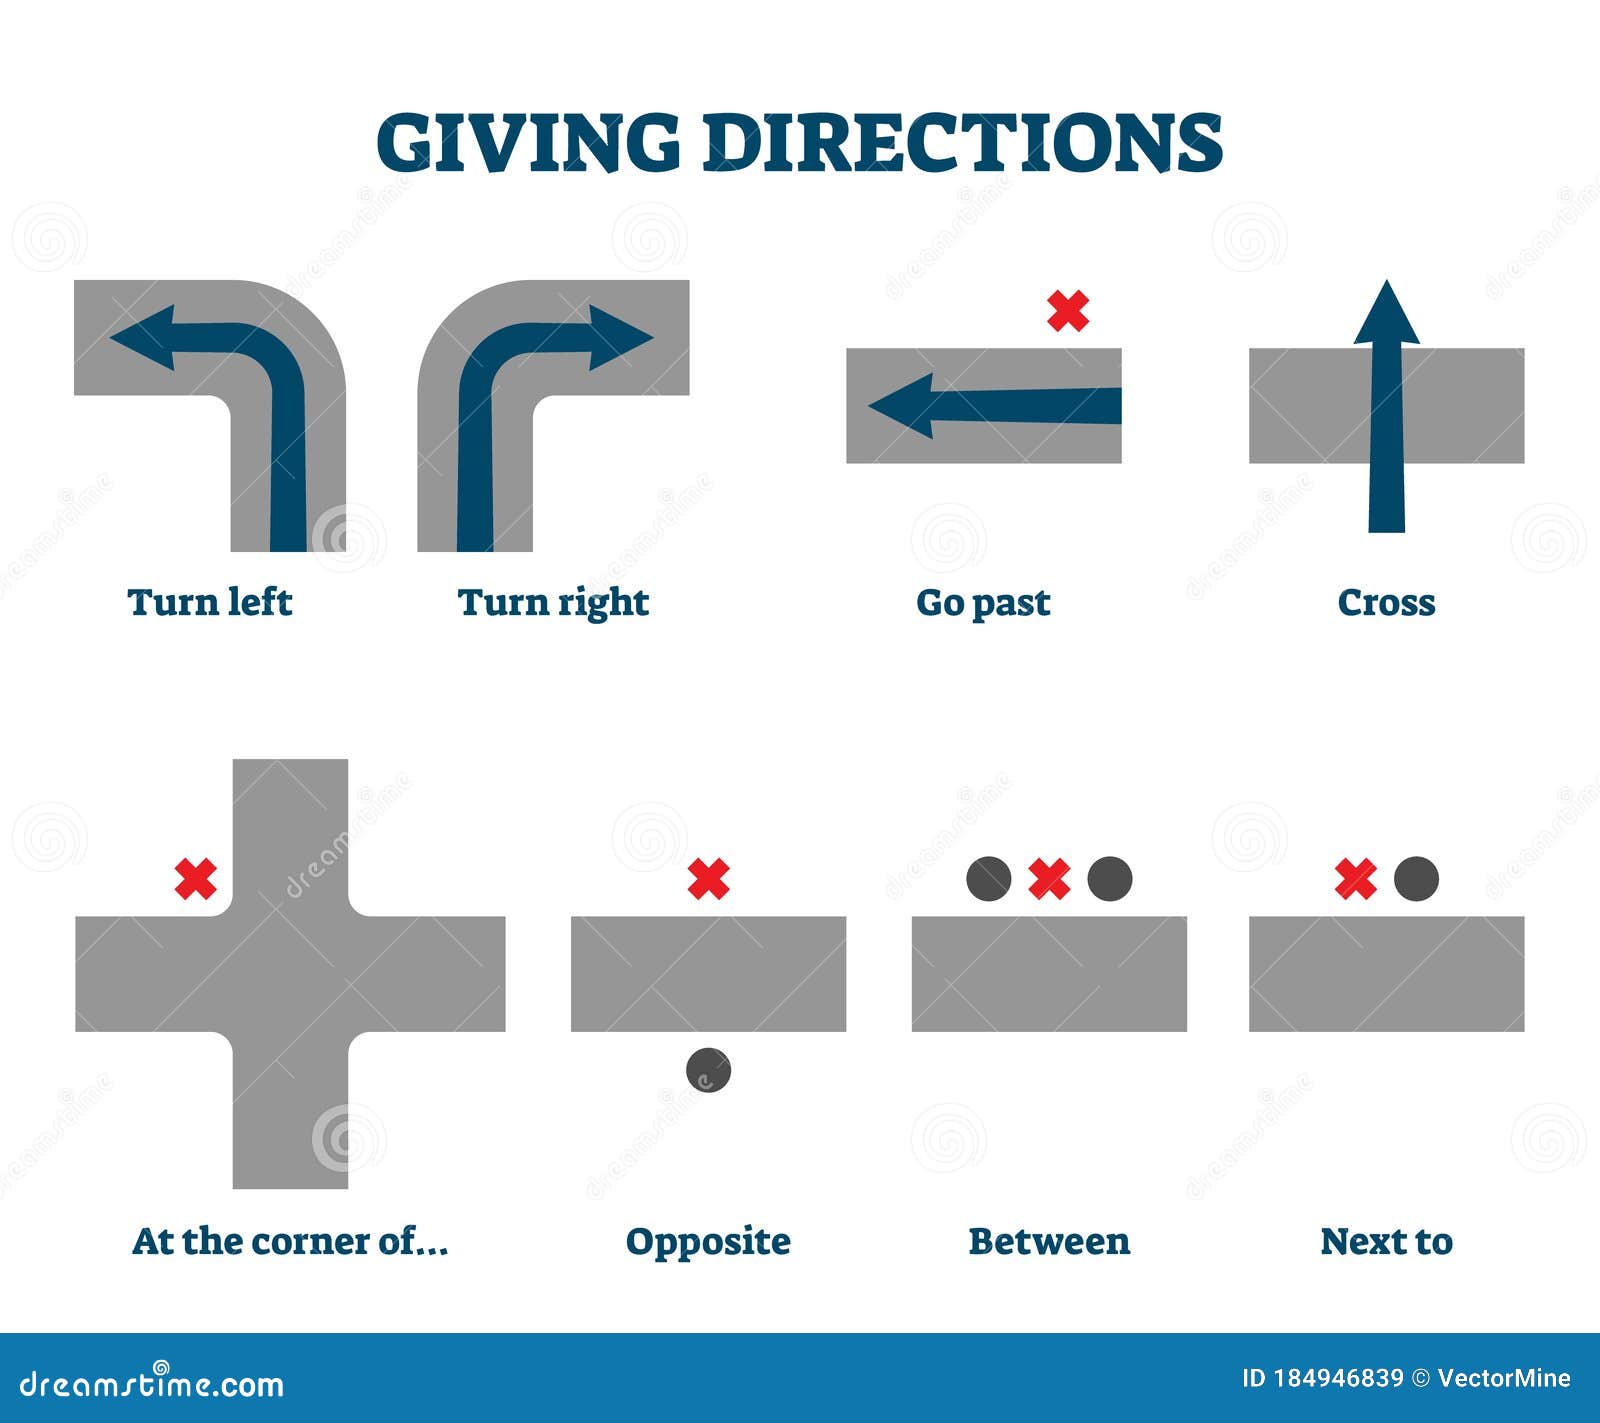 giving-direction-vector-illustration-educational-english-grammar-explanation-stock-vector